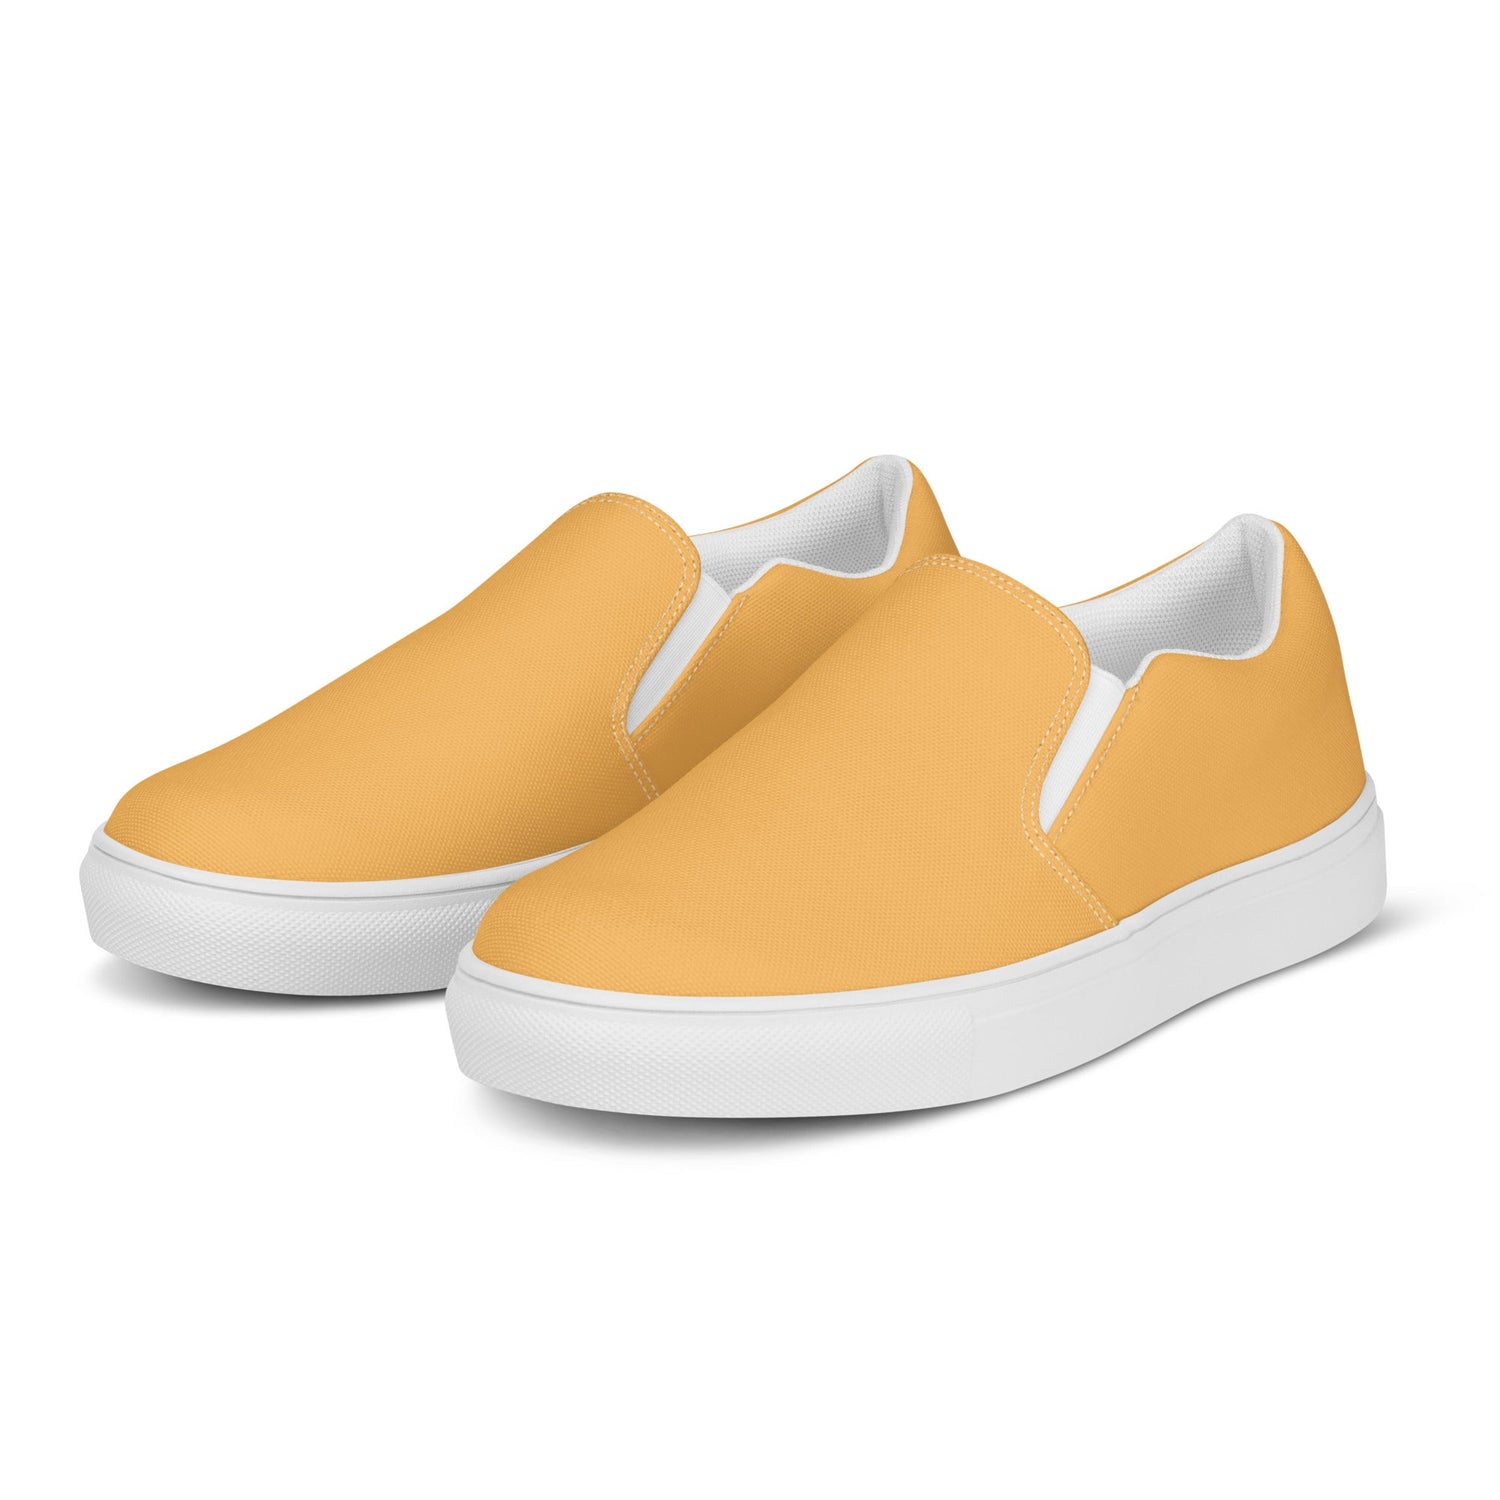 klasneakers Men’s slip-on canvas shoes - Light Orange